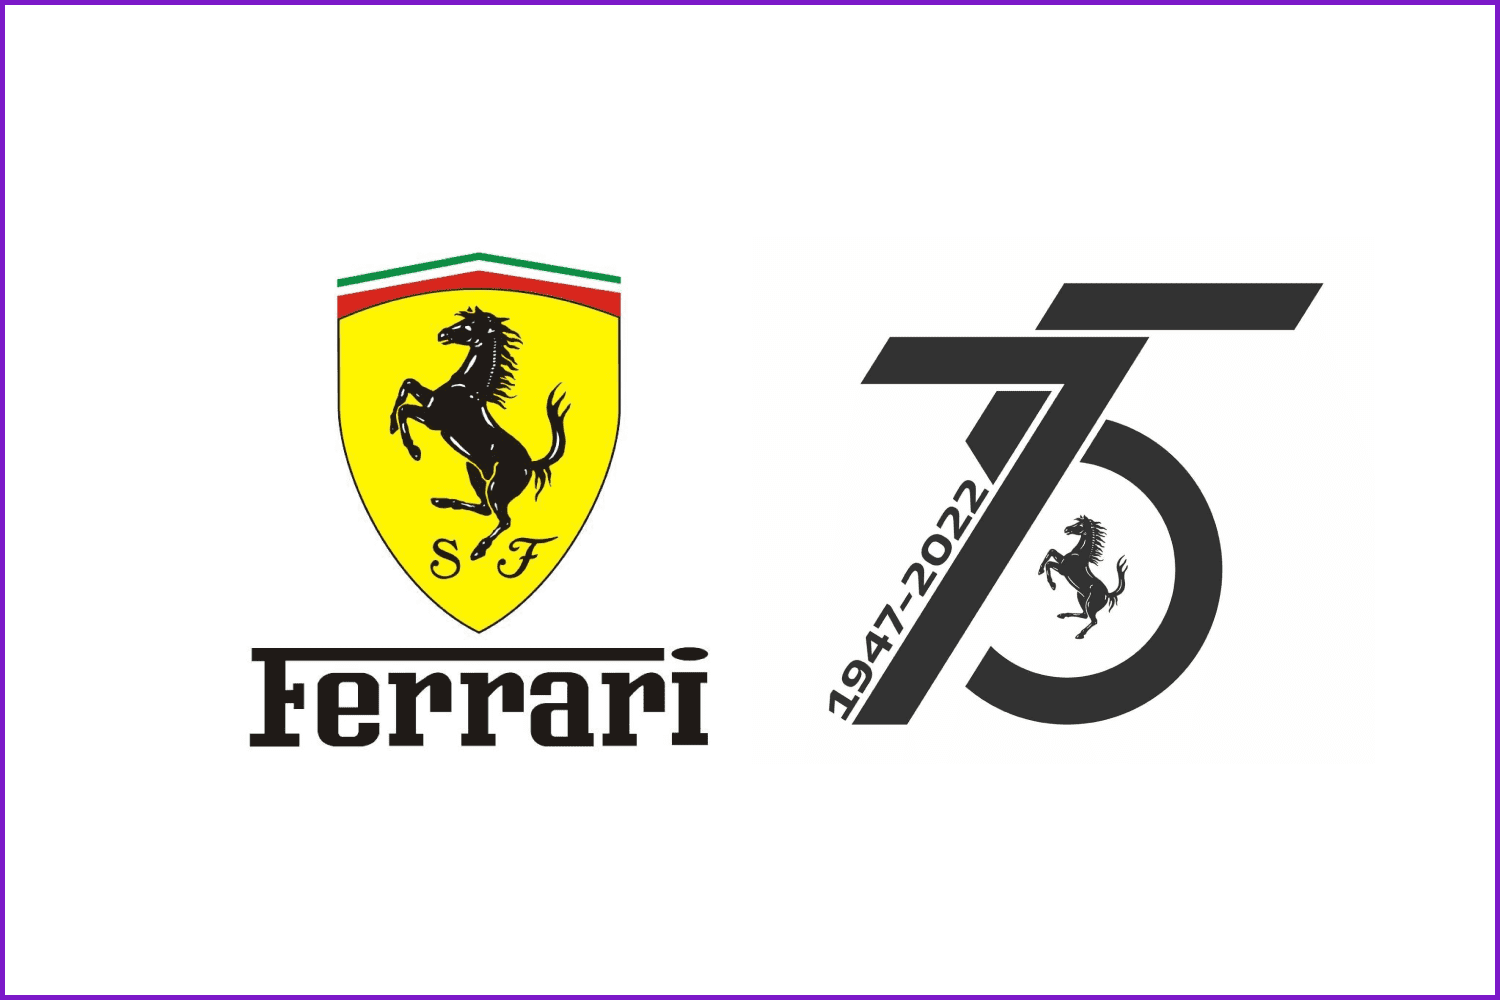 Ferrari logotype variants.